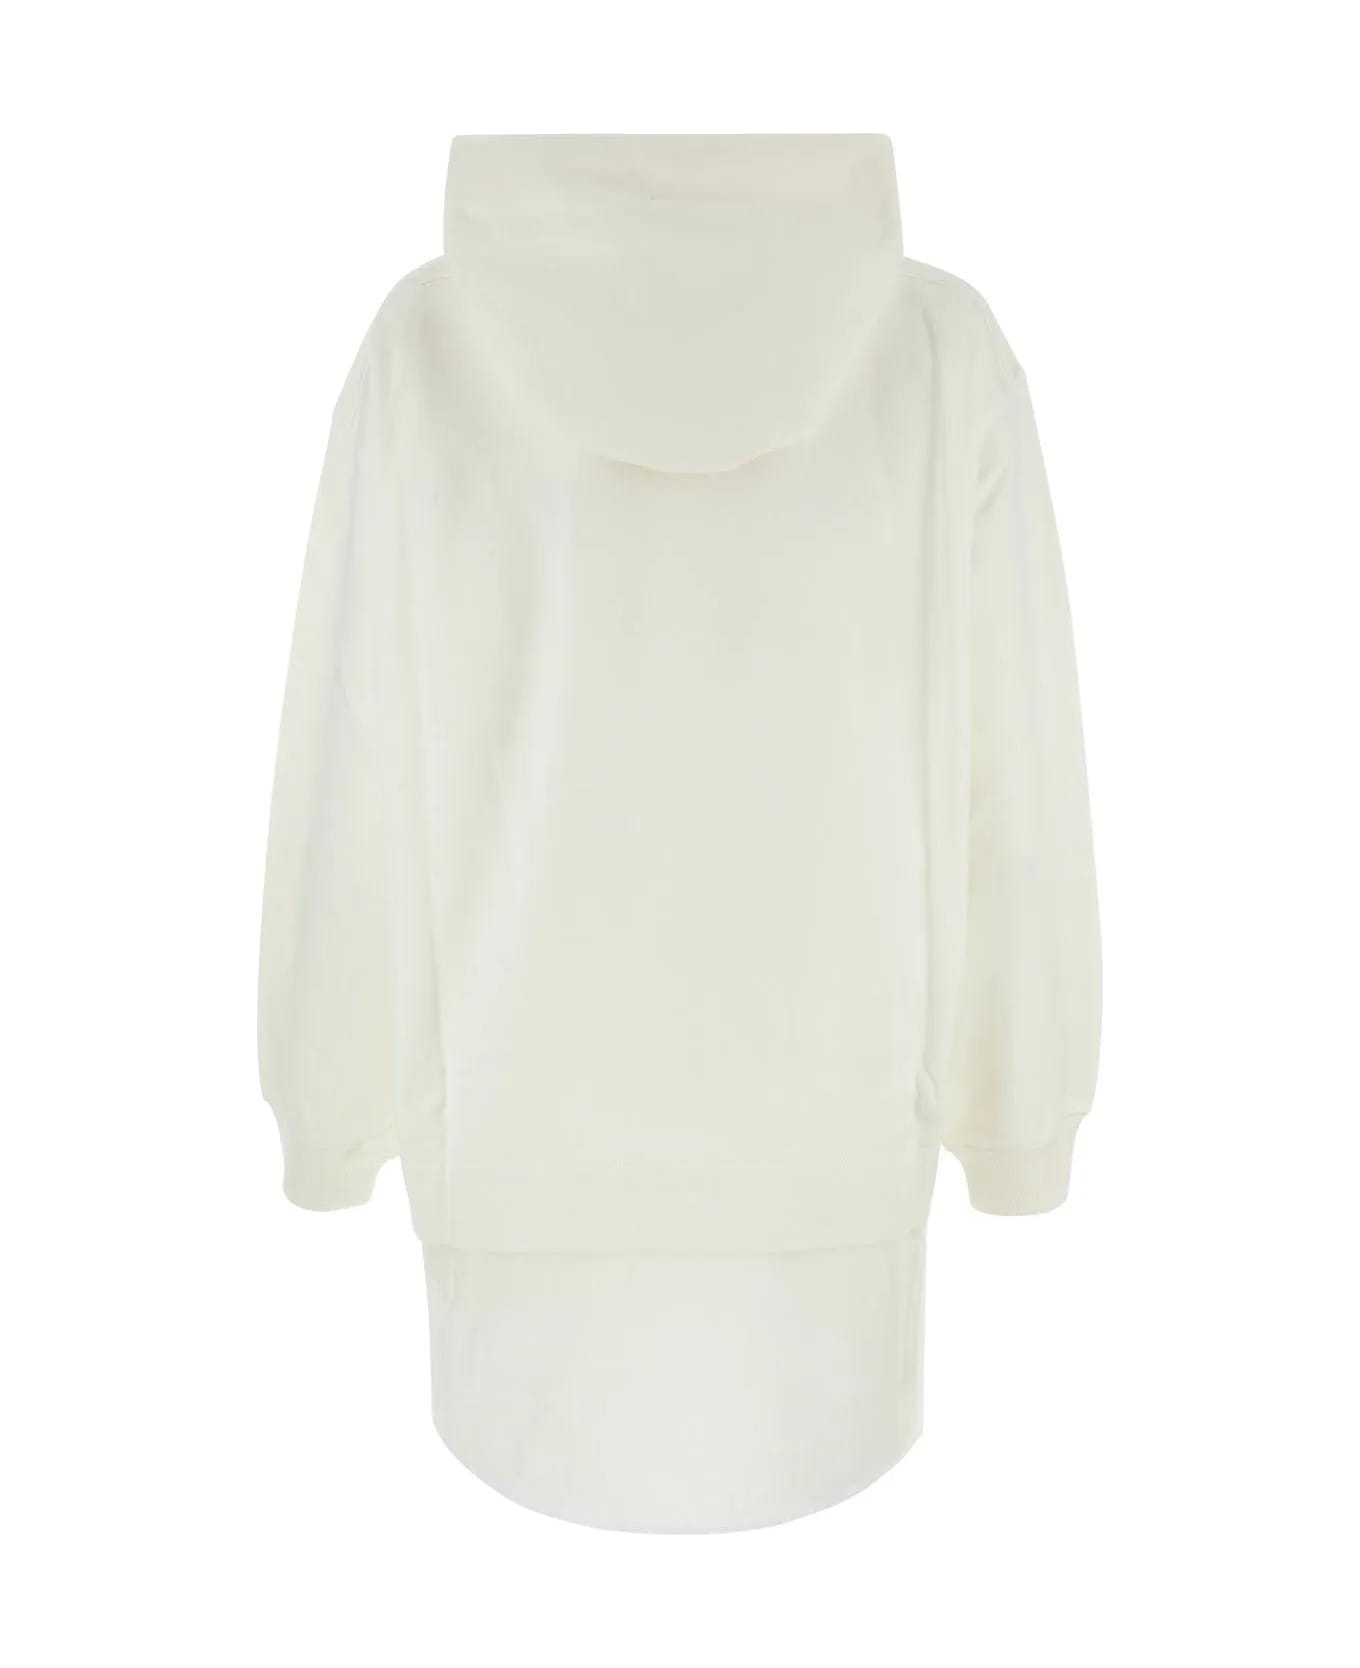 Patou Ivory Cotton Oversize Sweatshirt - A White